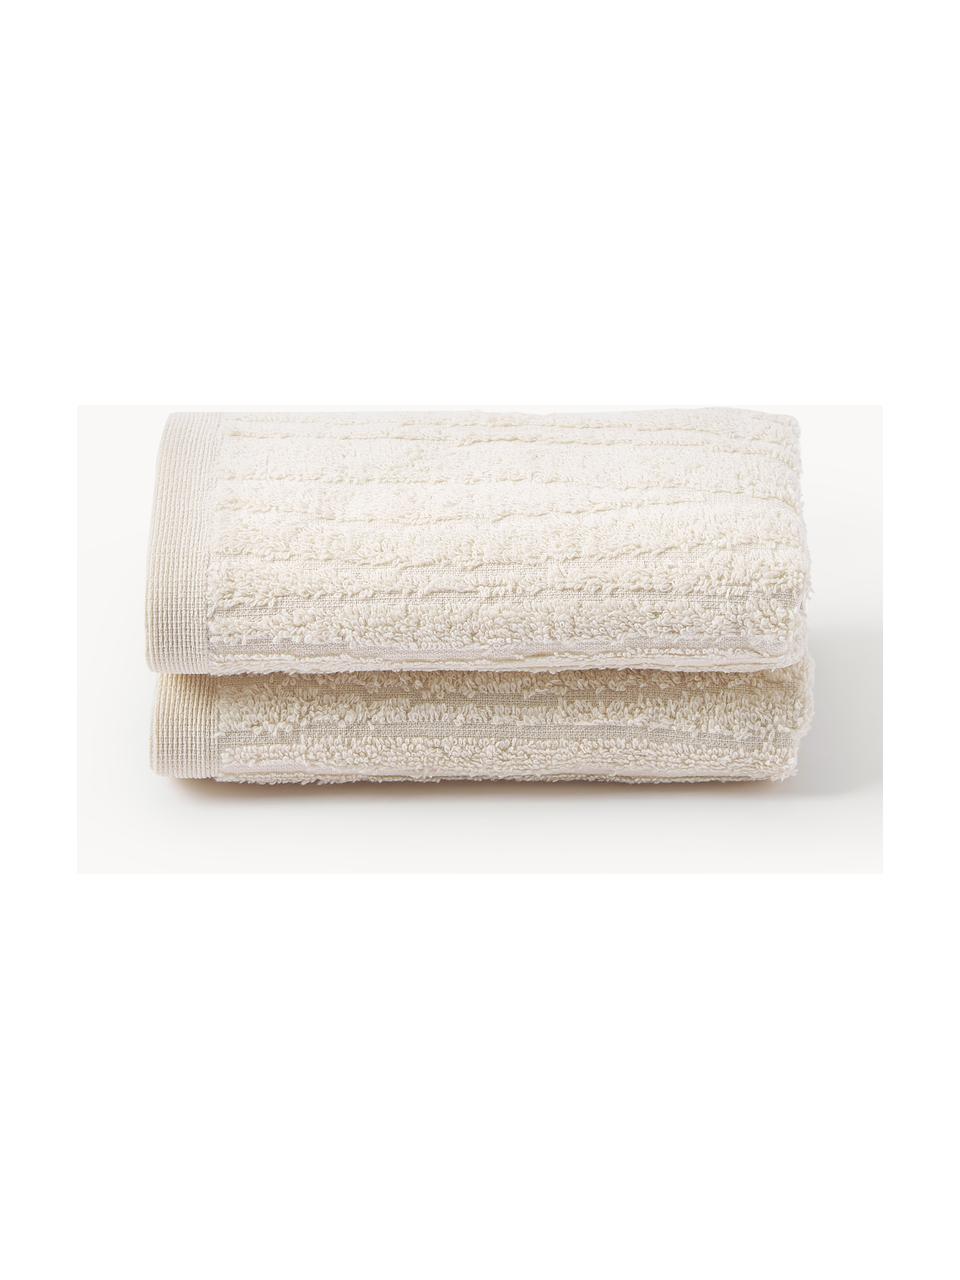 Toalla de algodón Audrina, tamaños diferentes, Beige claro, Toalla lavabo, An 50 x L 100 cm, 2 uds.